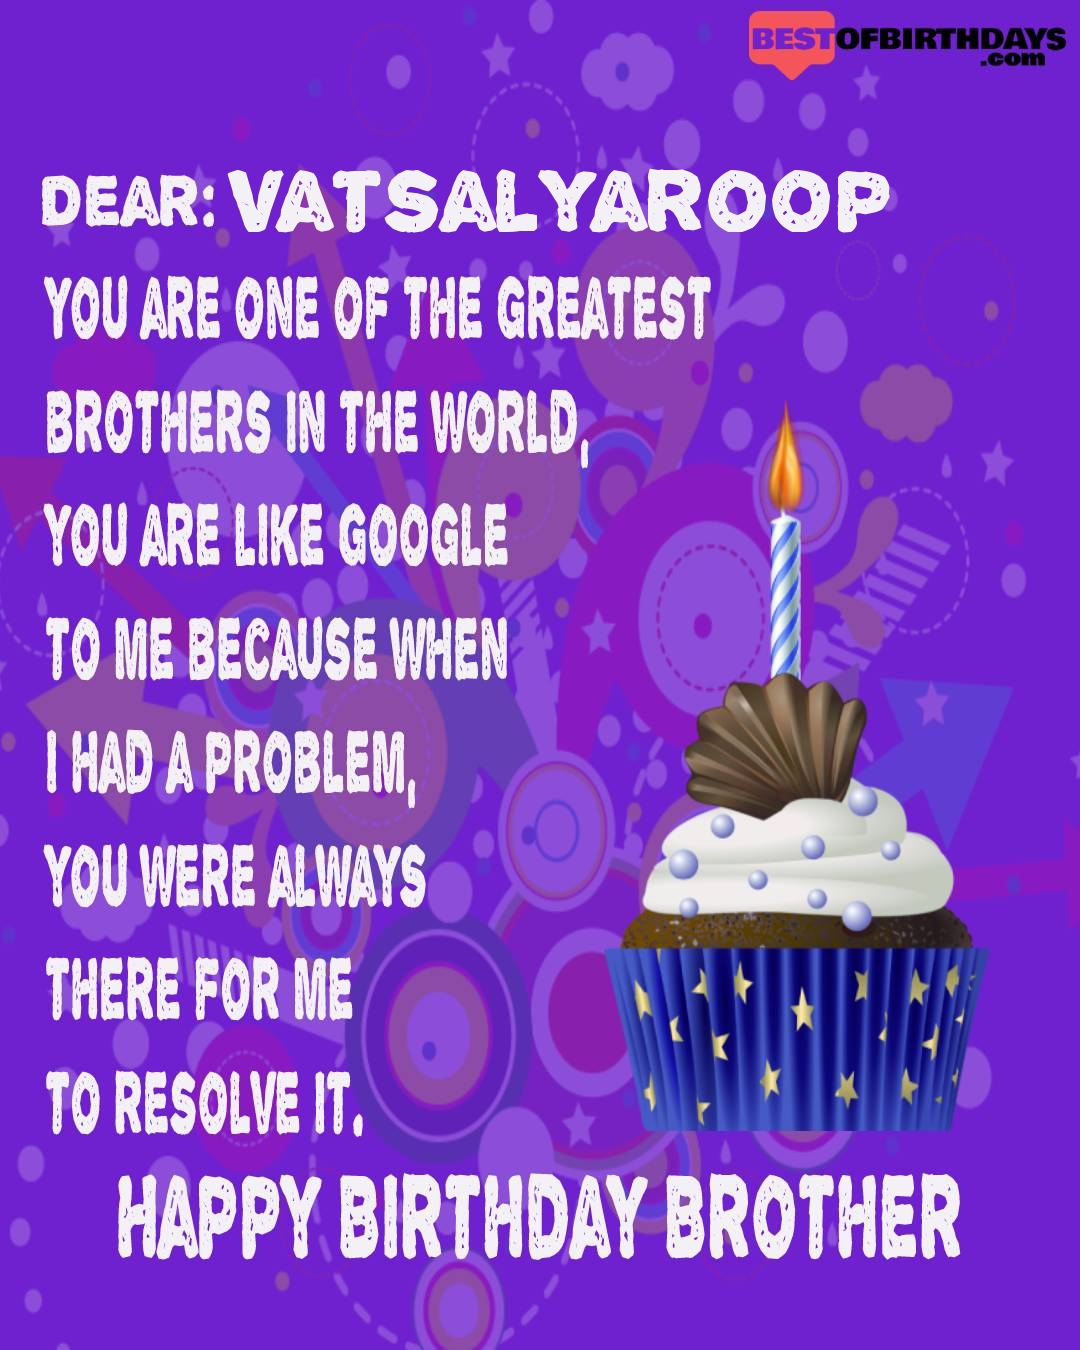 Happy birthday vatsalyaroop bhai brother bro